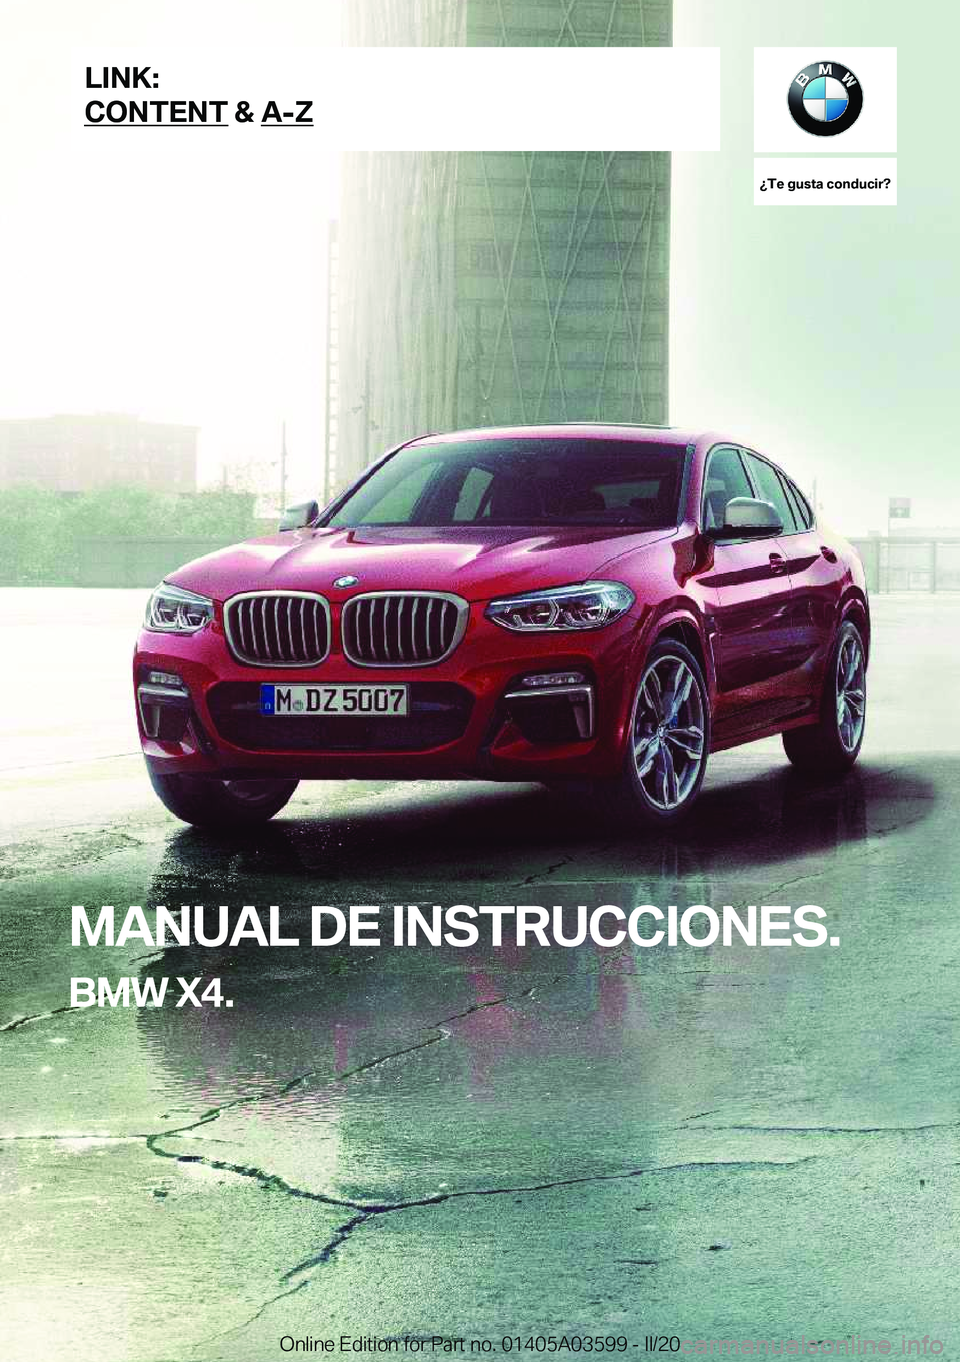 BMW X4 2020  Manuales de Empleo (in Spanish) ��T�e��g�u�s�t�a��c�o�n�d�u�c�i�r� 
�M�A�N�U�A�L��D�E��I�N�S�T�R�U�C�C�I�O�N�E�S�.
�B�M�W��X�4�.�L�I�N�K�:
�C�O�N�T�E�N�T��&��A�-�Z�O�n�l�i�n�e��E�d�i�t�i�o�n��f�o�r��P�a�r�t��n�o�.��0�1�